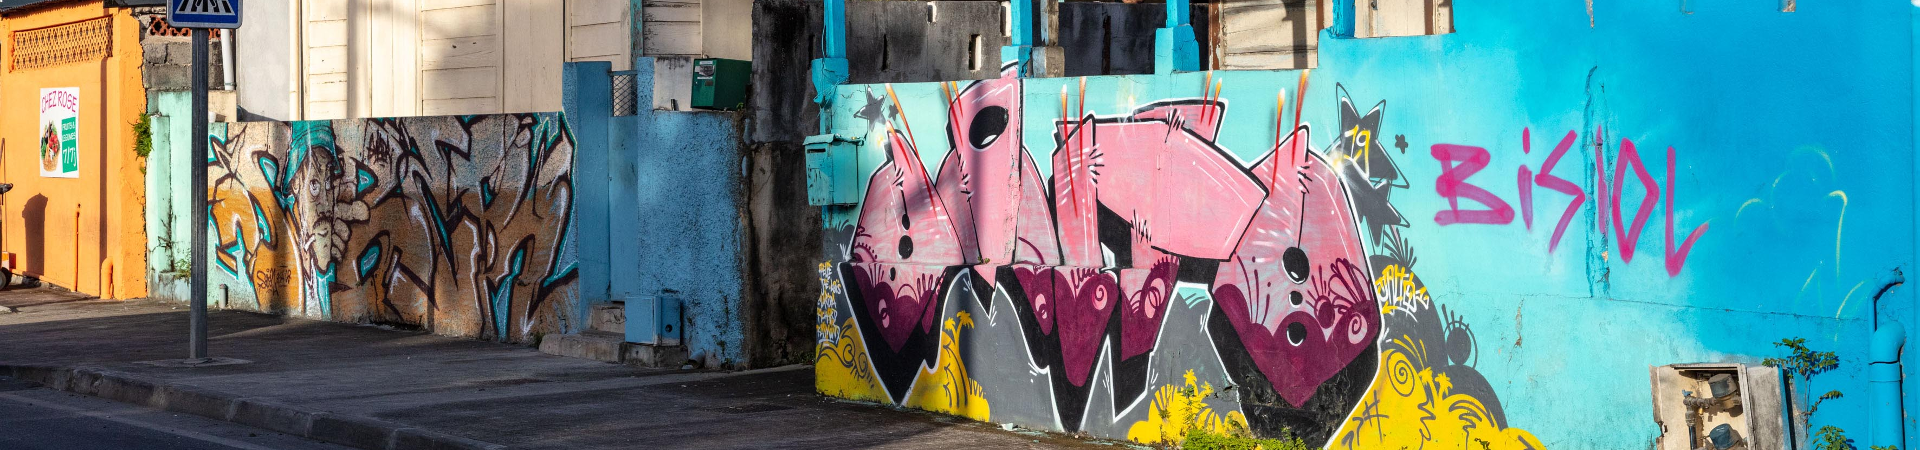 Tour Pointe-à-Pitre en Bip Bip Street art